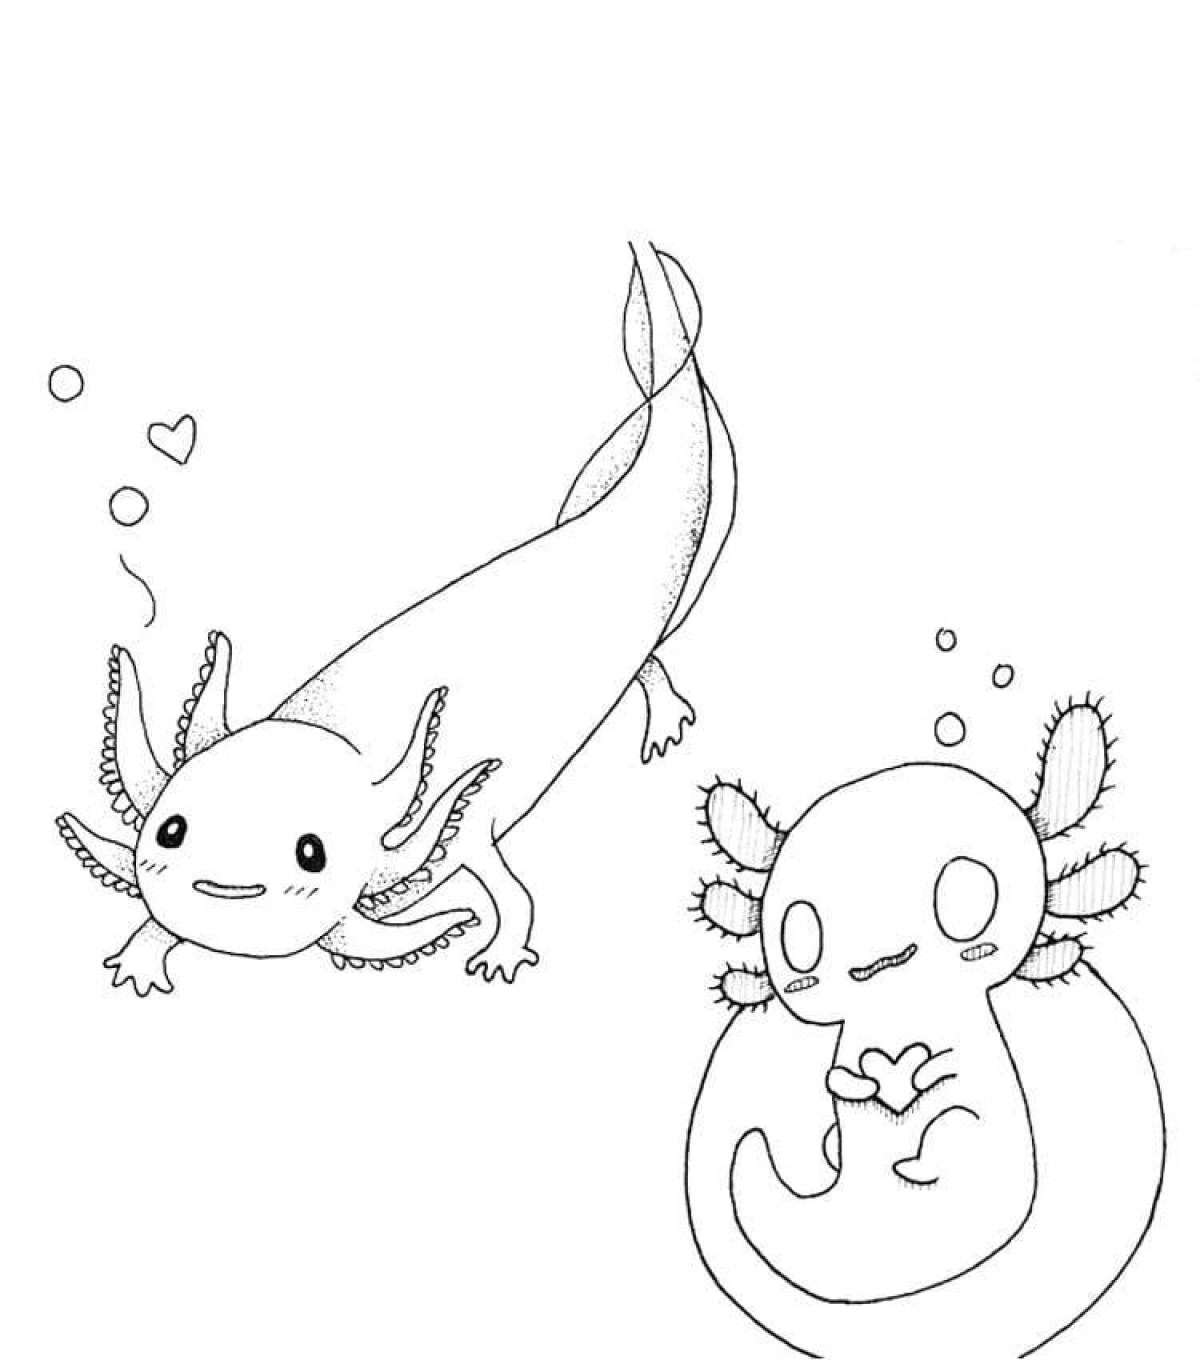 Cute axolotl coloring book